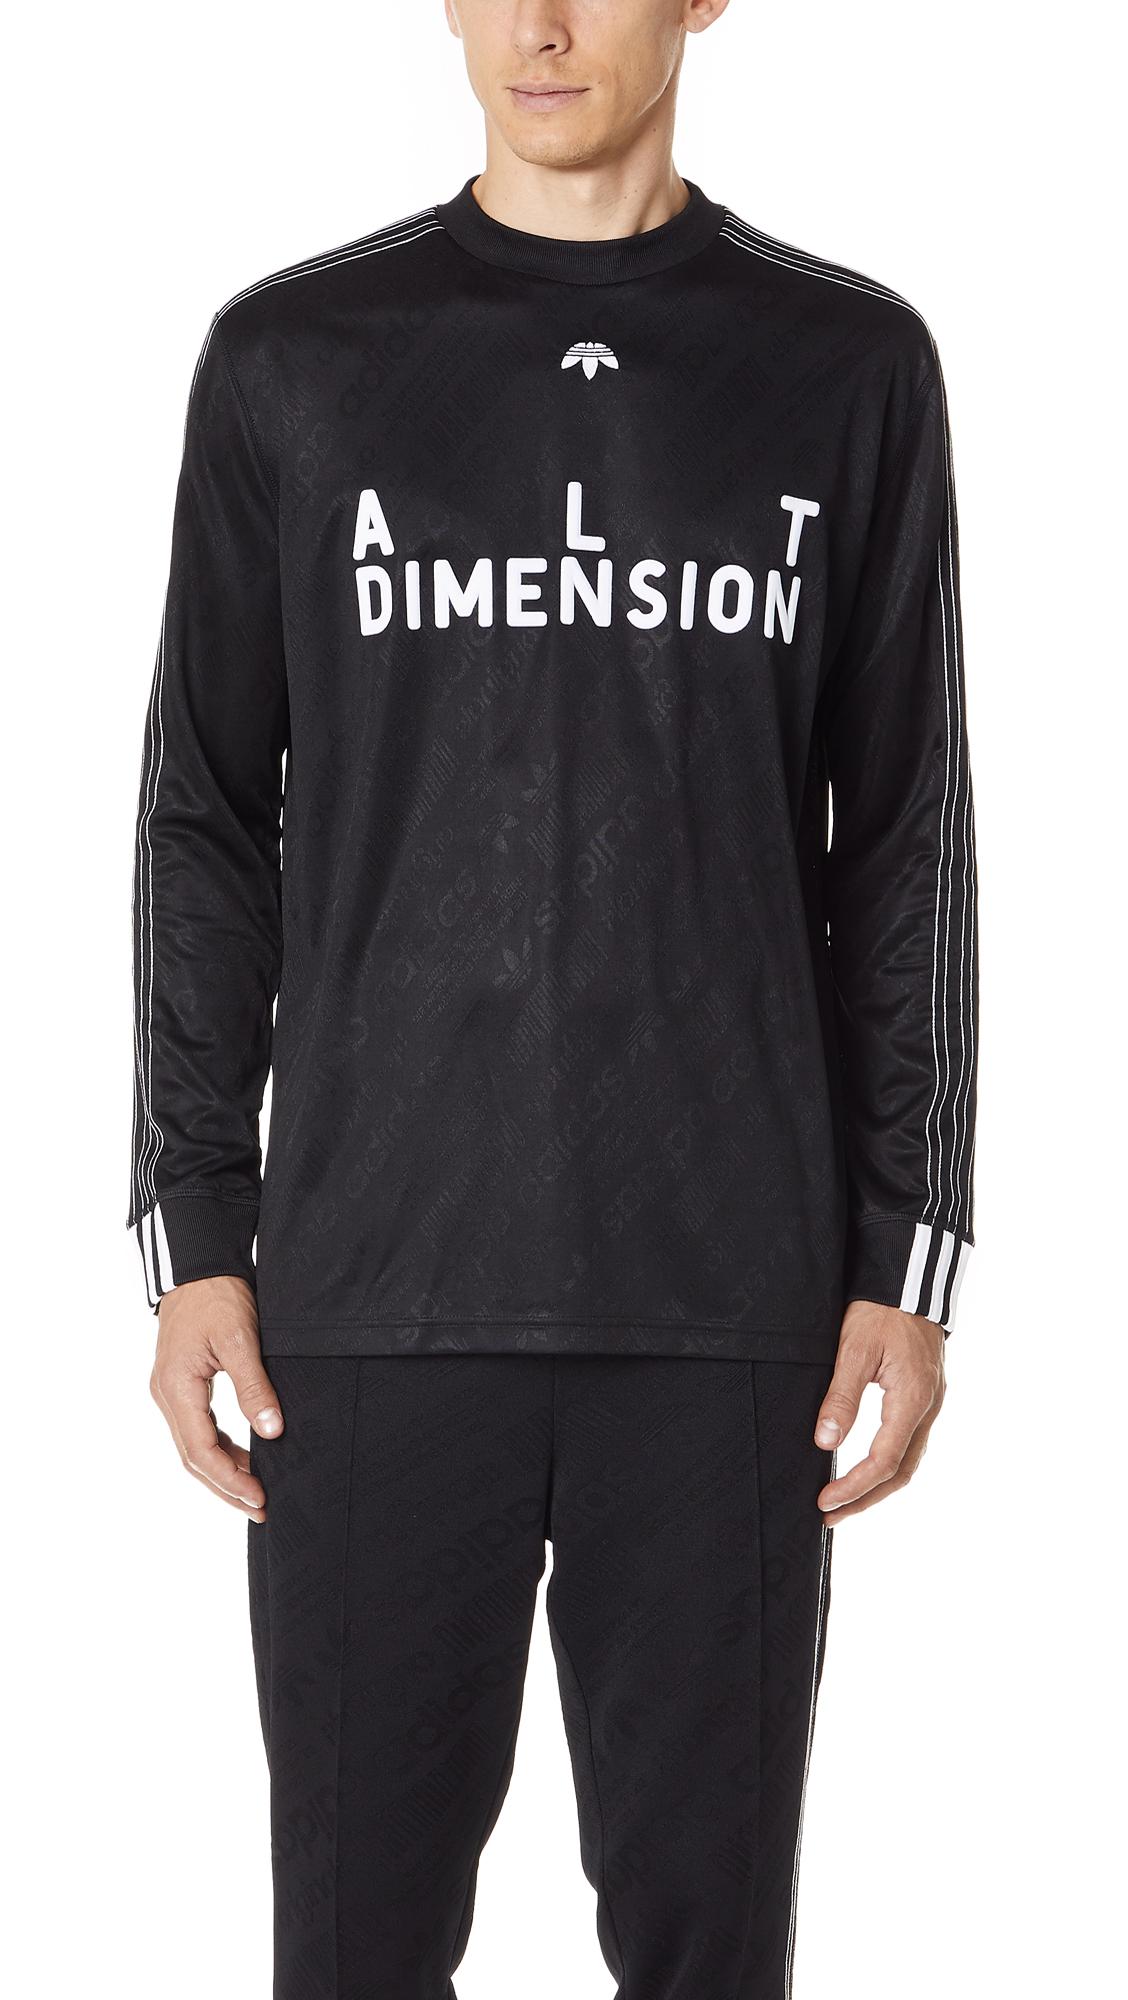 alt dimension adidas shirt